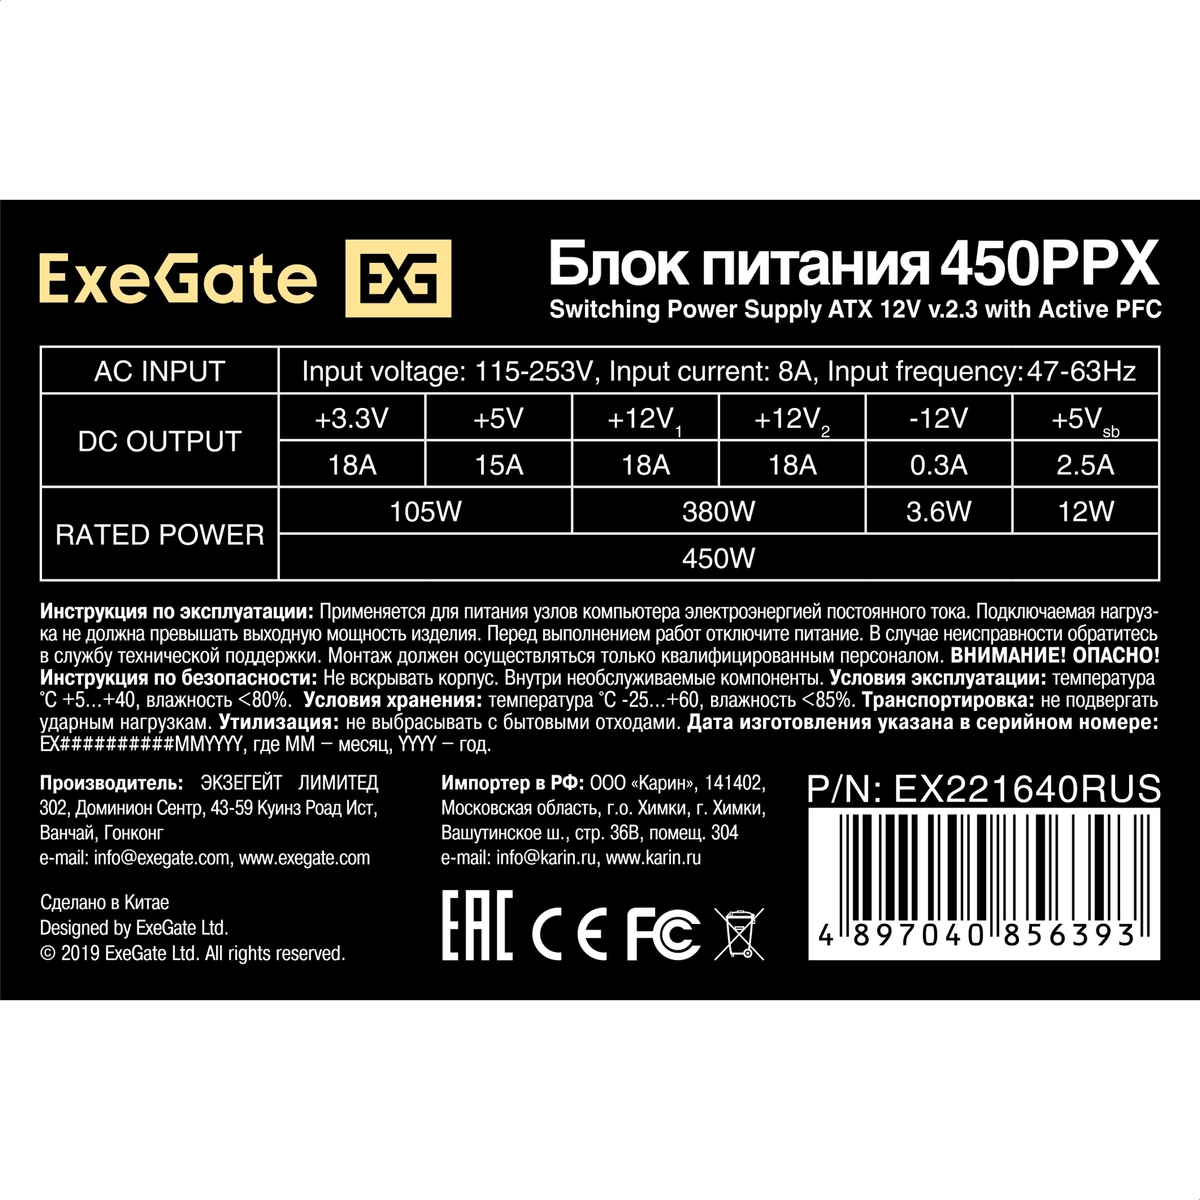 Блок питания 450W ExeGate 450PPX